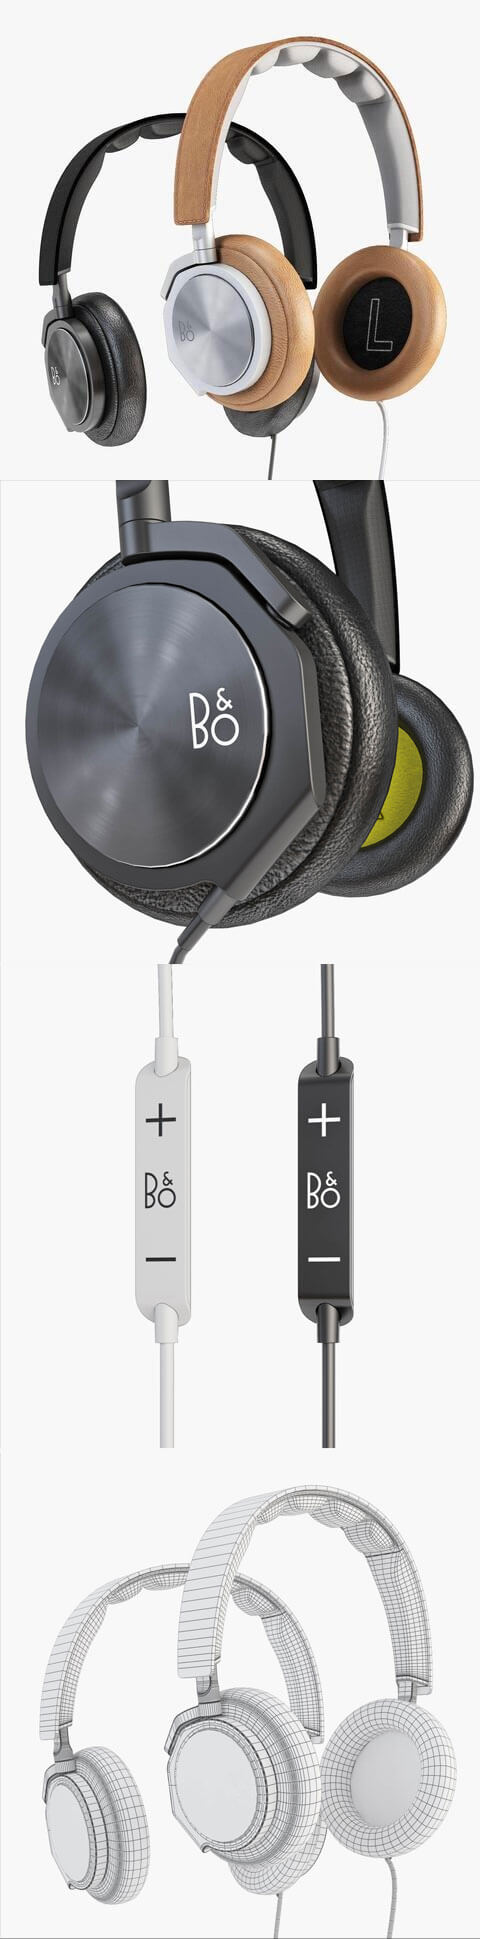 B&O beoplay H6 头戴耳机3D模型下载（OBJ,max,fbx）